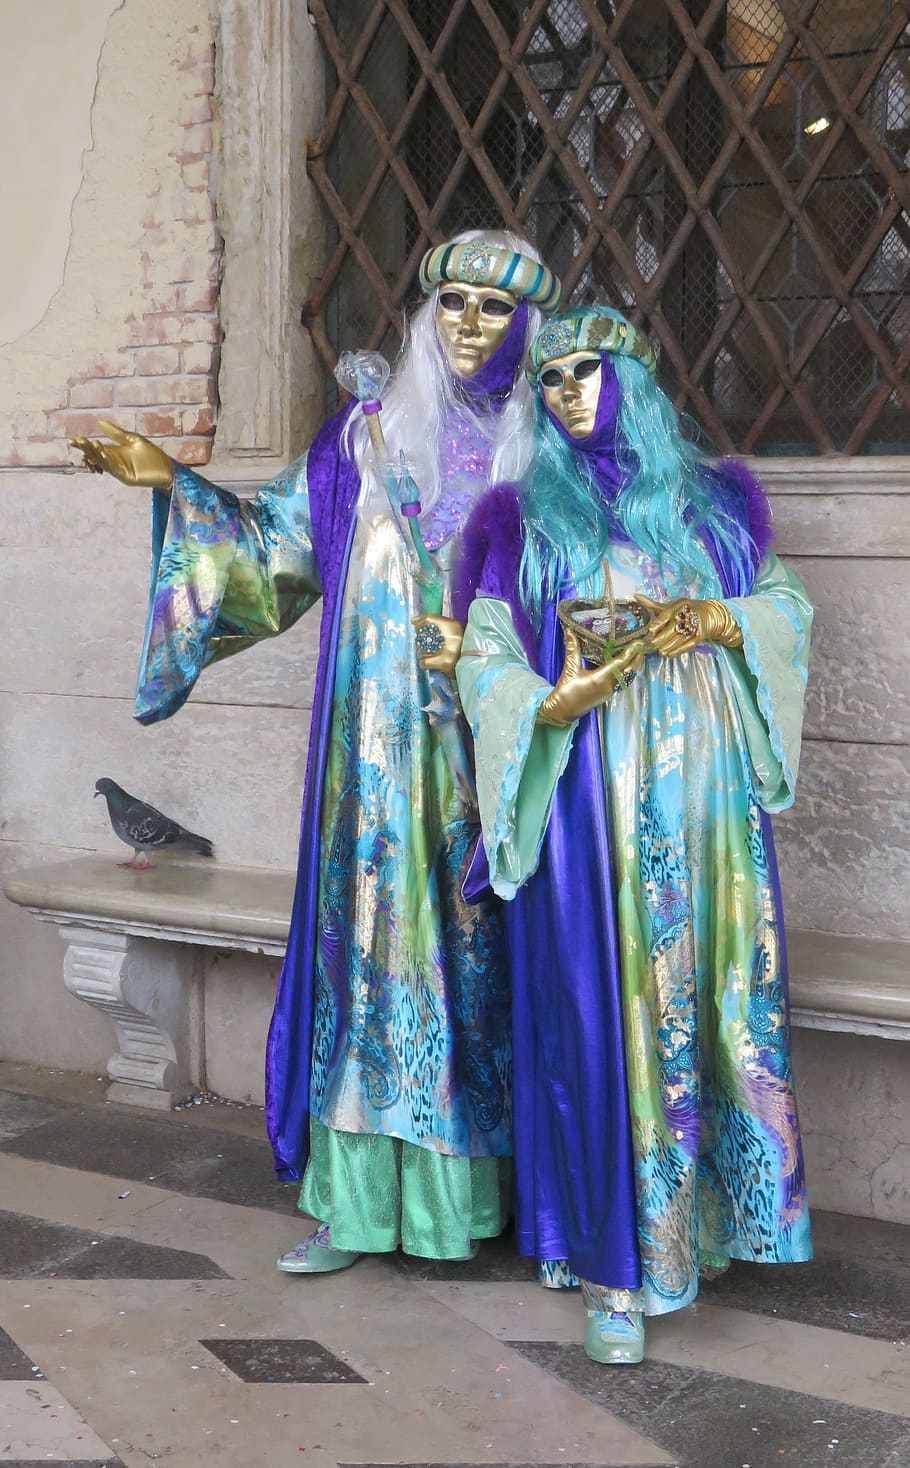 venice, masks, carnival, italy, costume, venezia, secret, masquerade, venetian mask, celebration